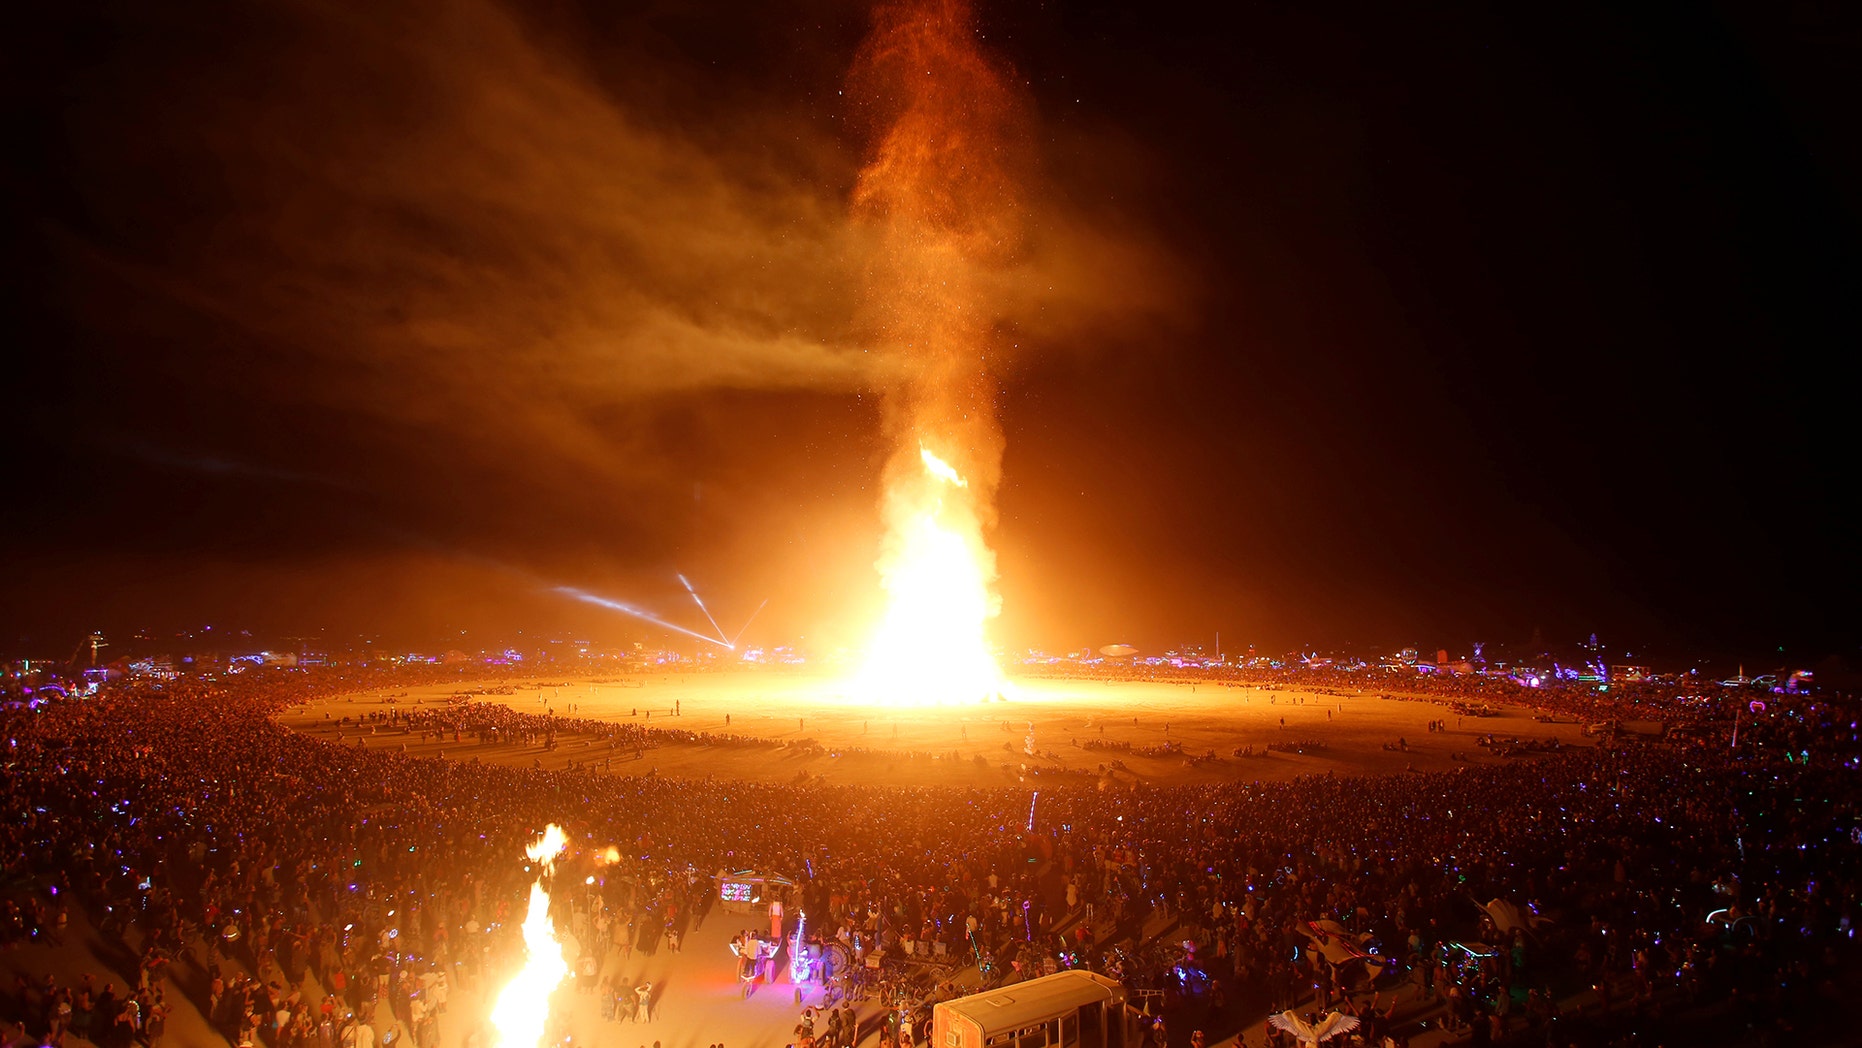 Jamie Guzman Kabar Burning Man Death Fire